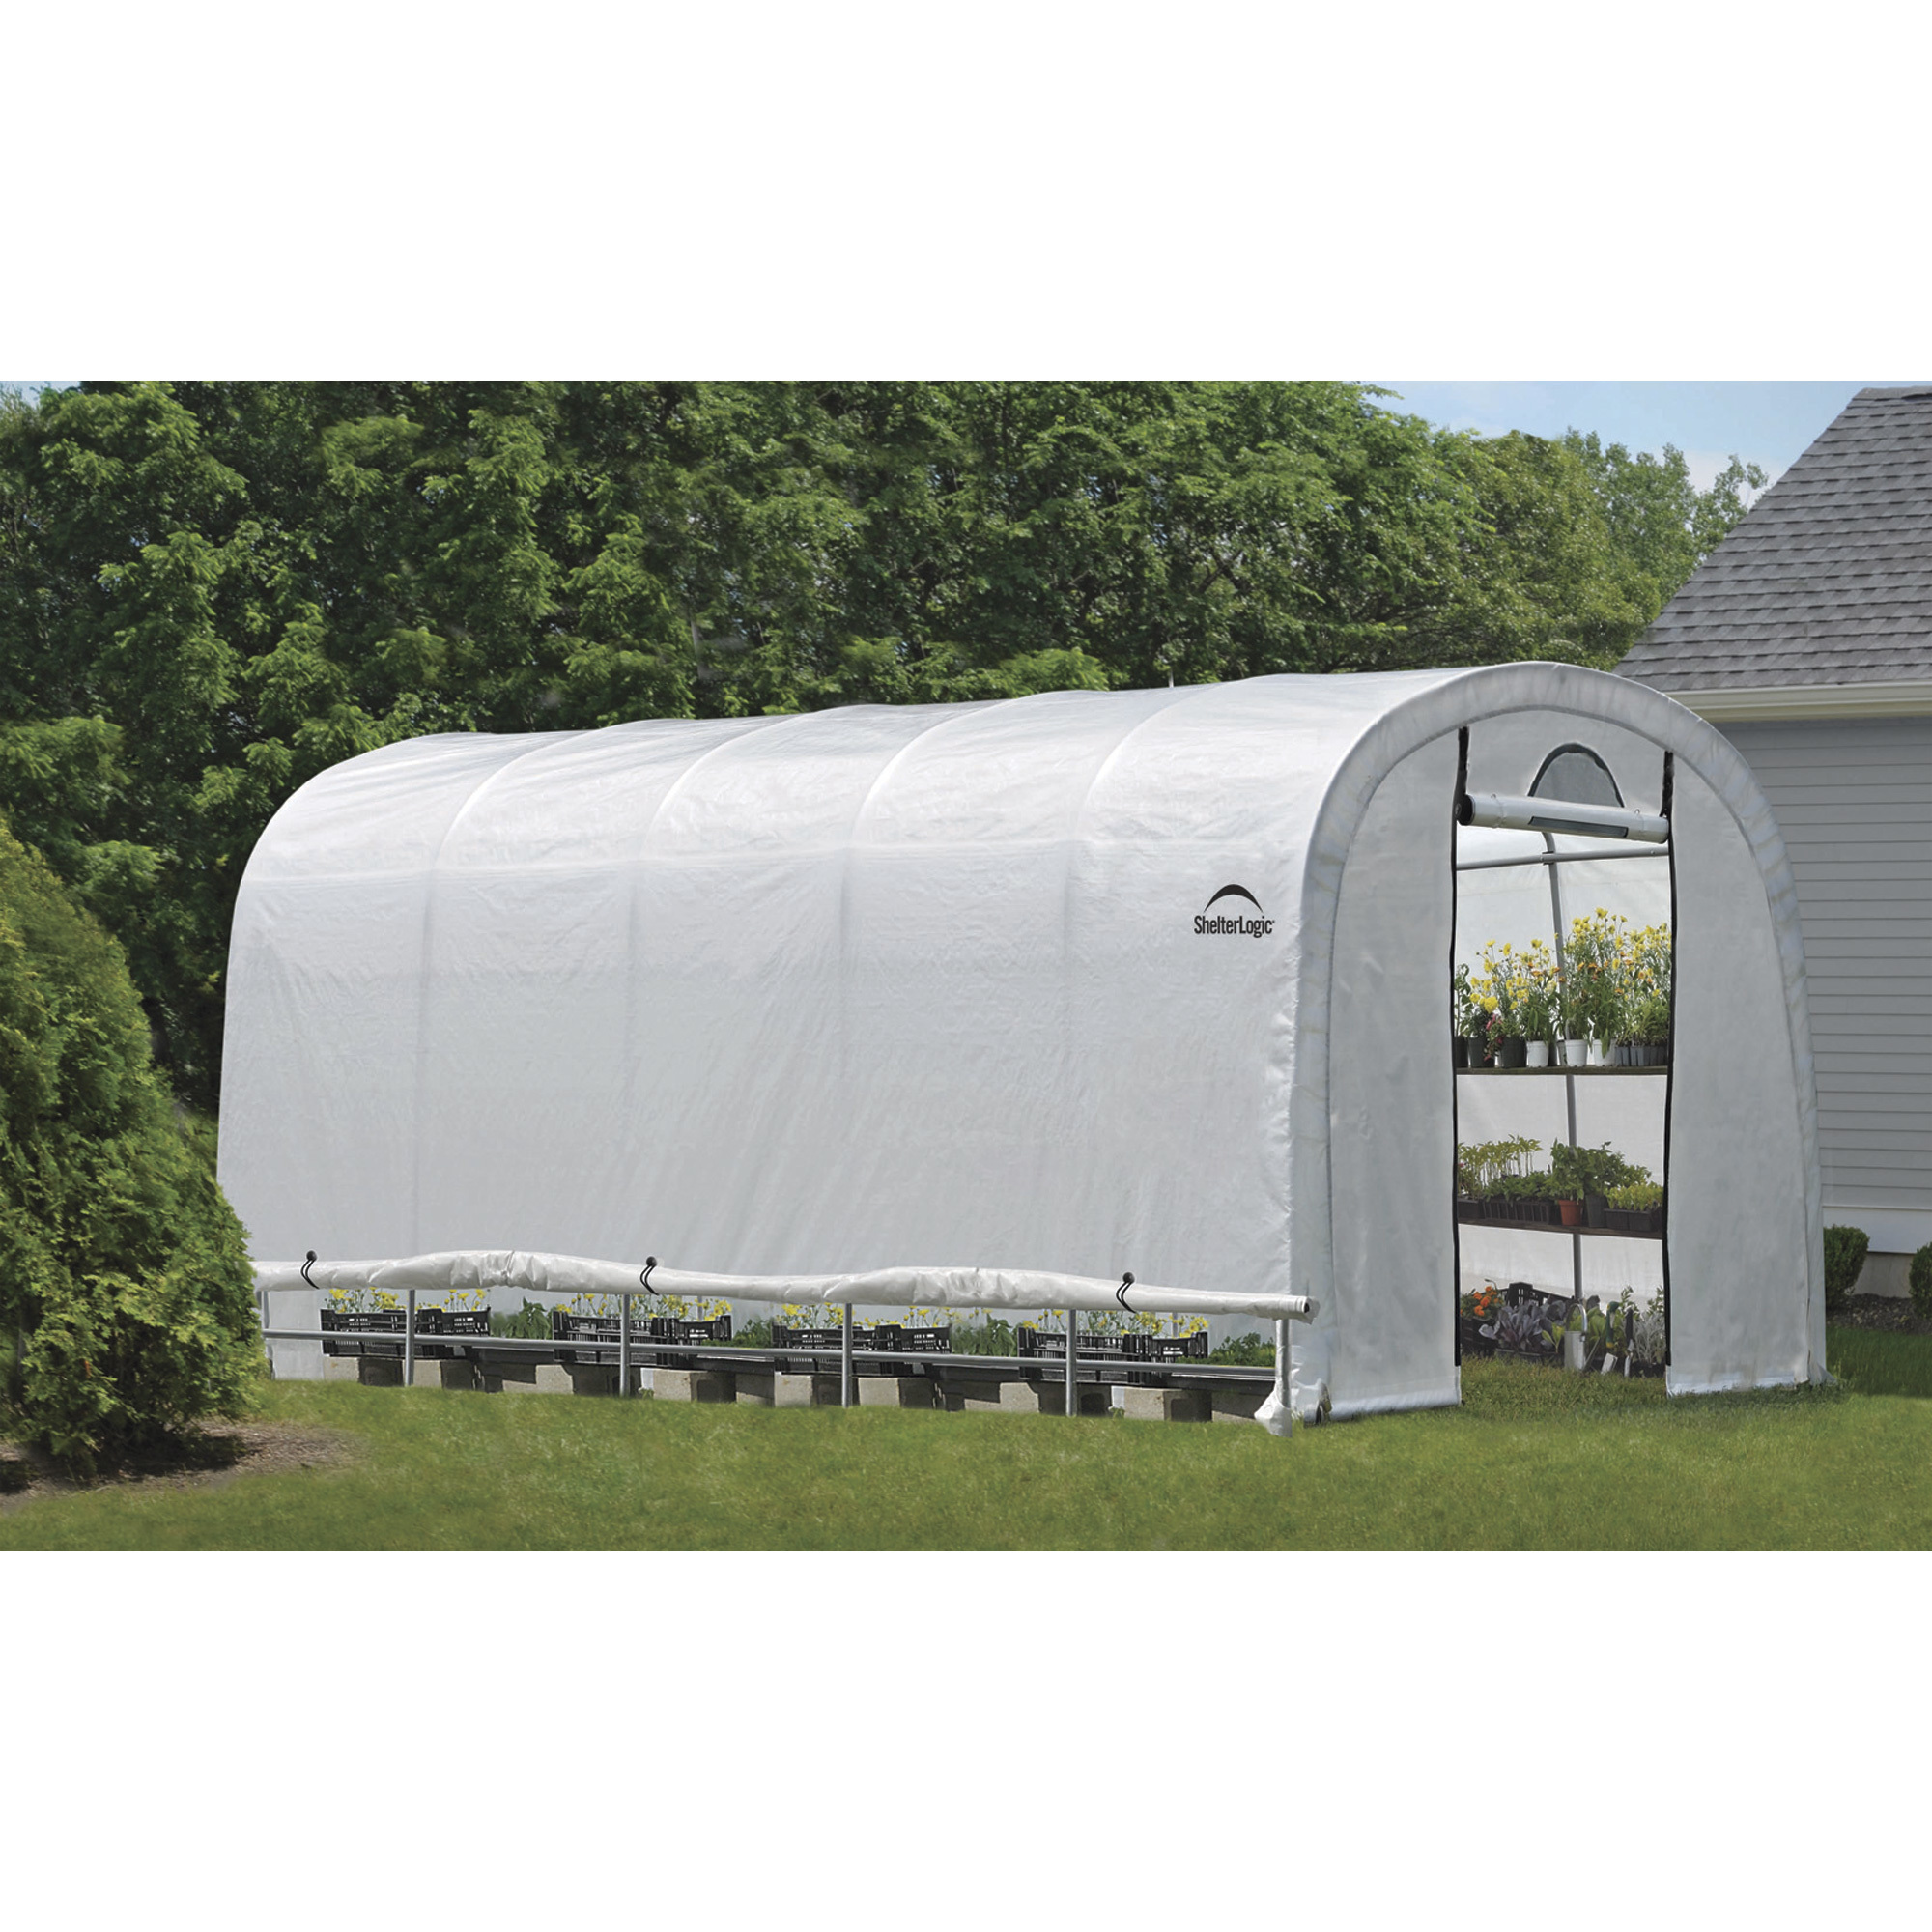 ShelterLogic GrowIT Heavy-Duty Round Greenhouse, 12ft.W x 20ft.L x 8ft.H, Model 70592